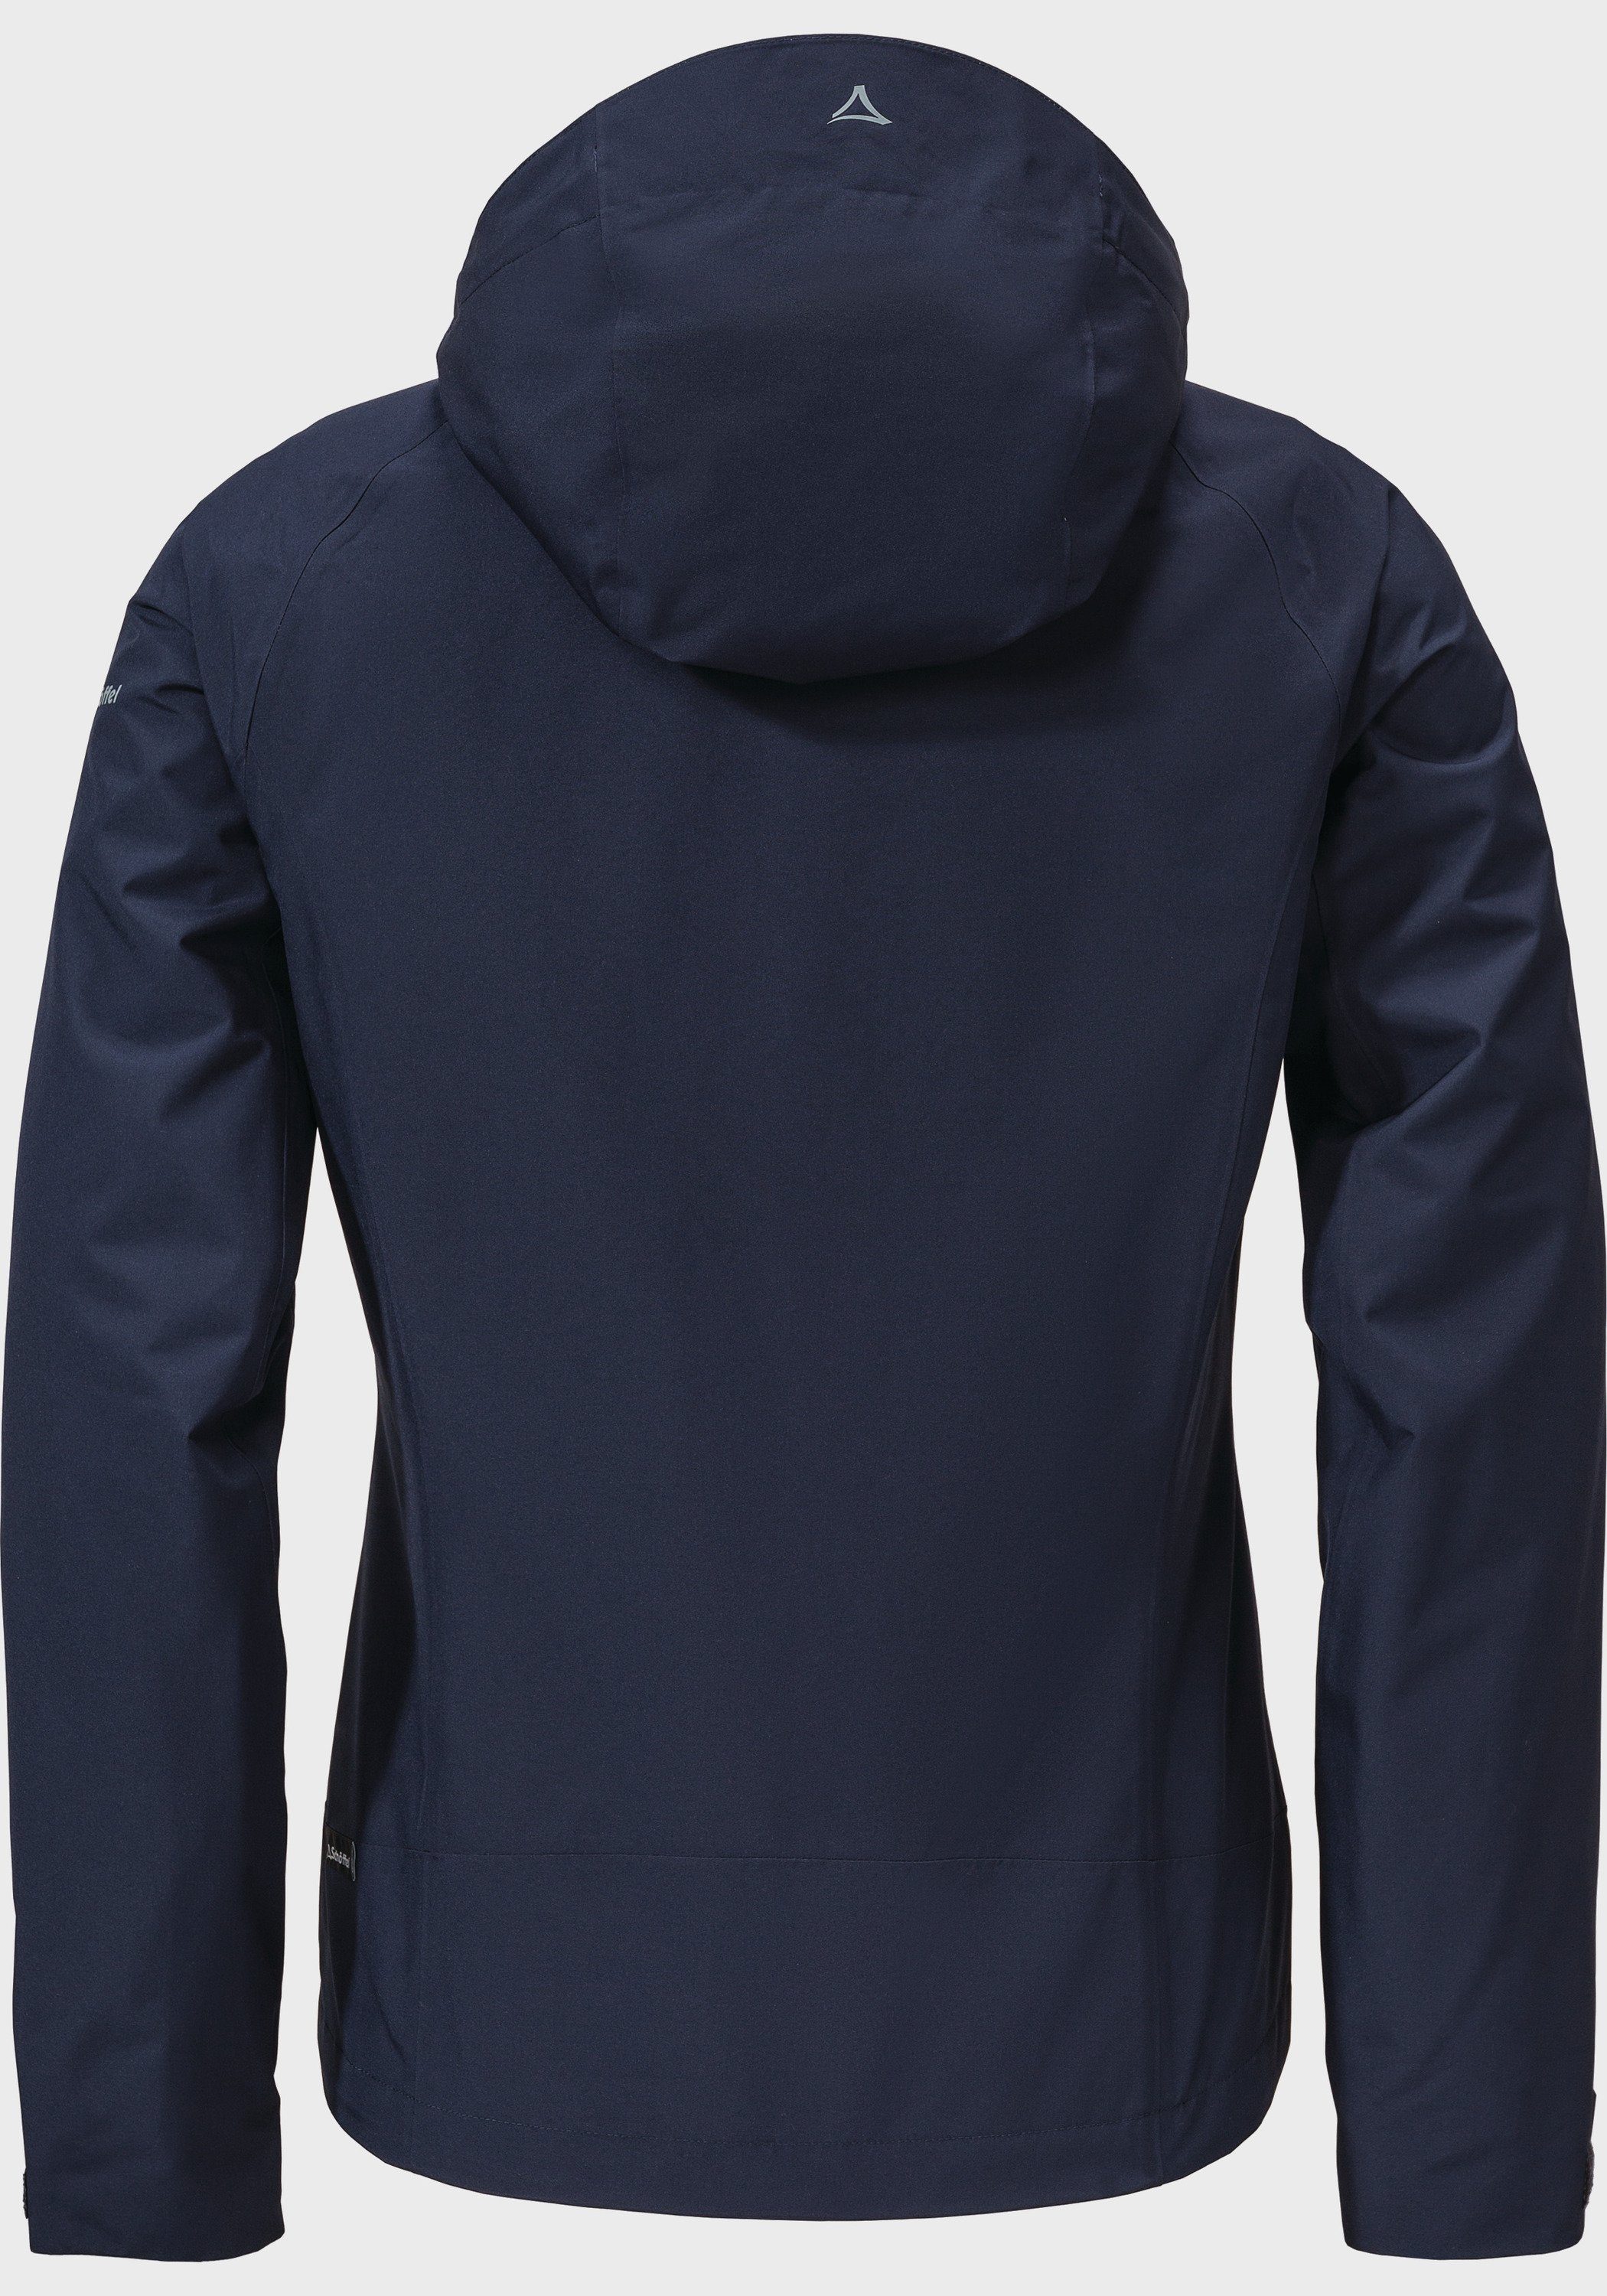 L Wamberg blau Schöffel Jacket Outdoorjacke